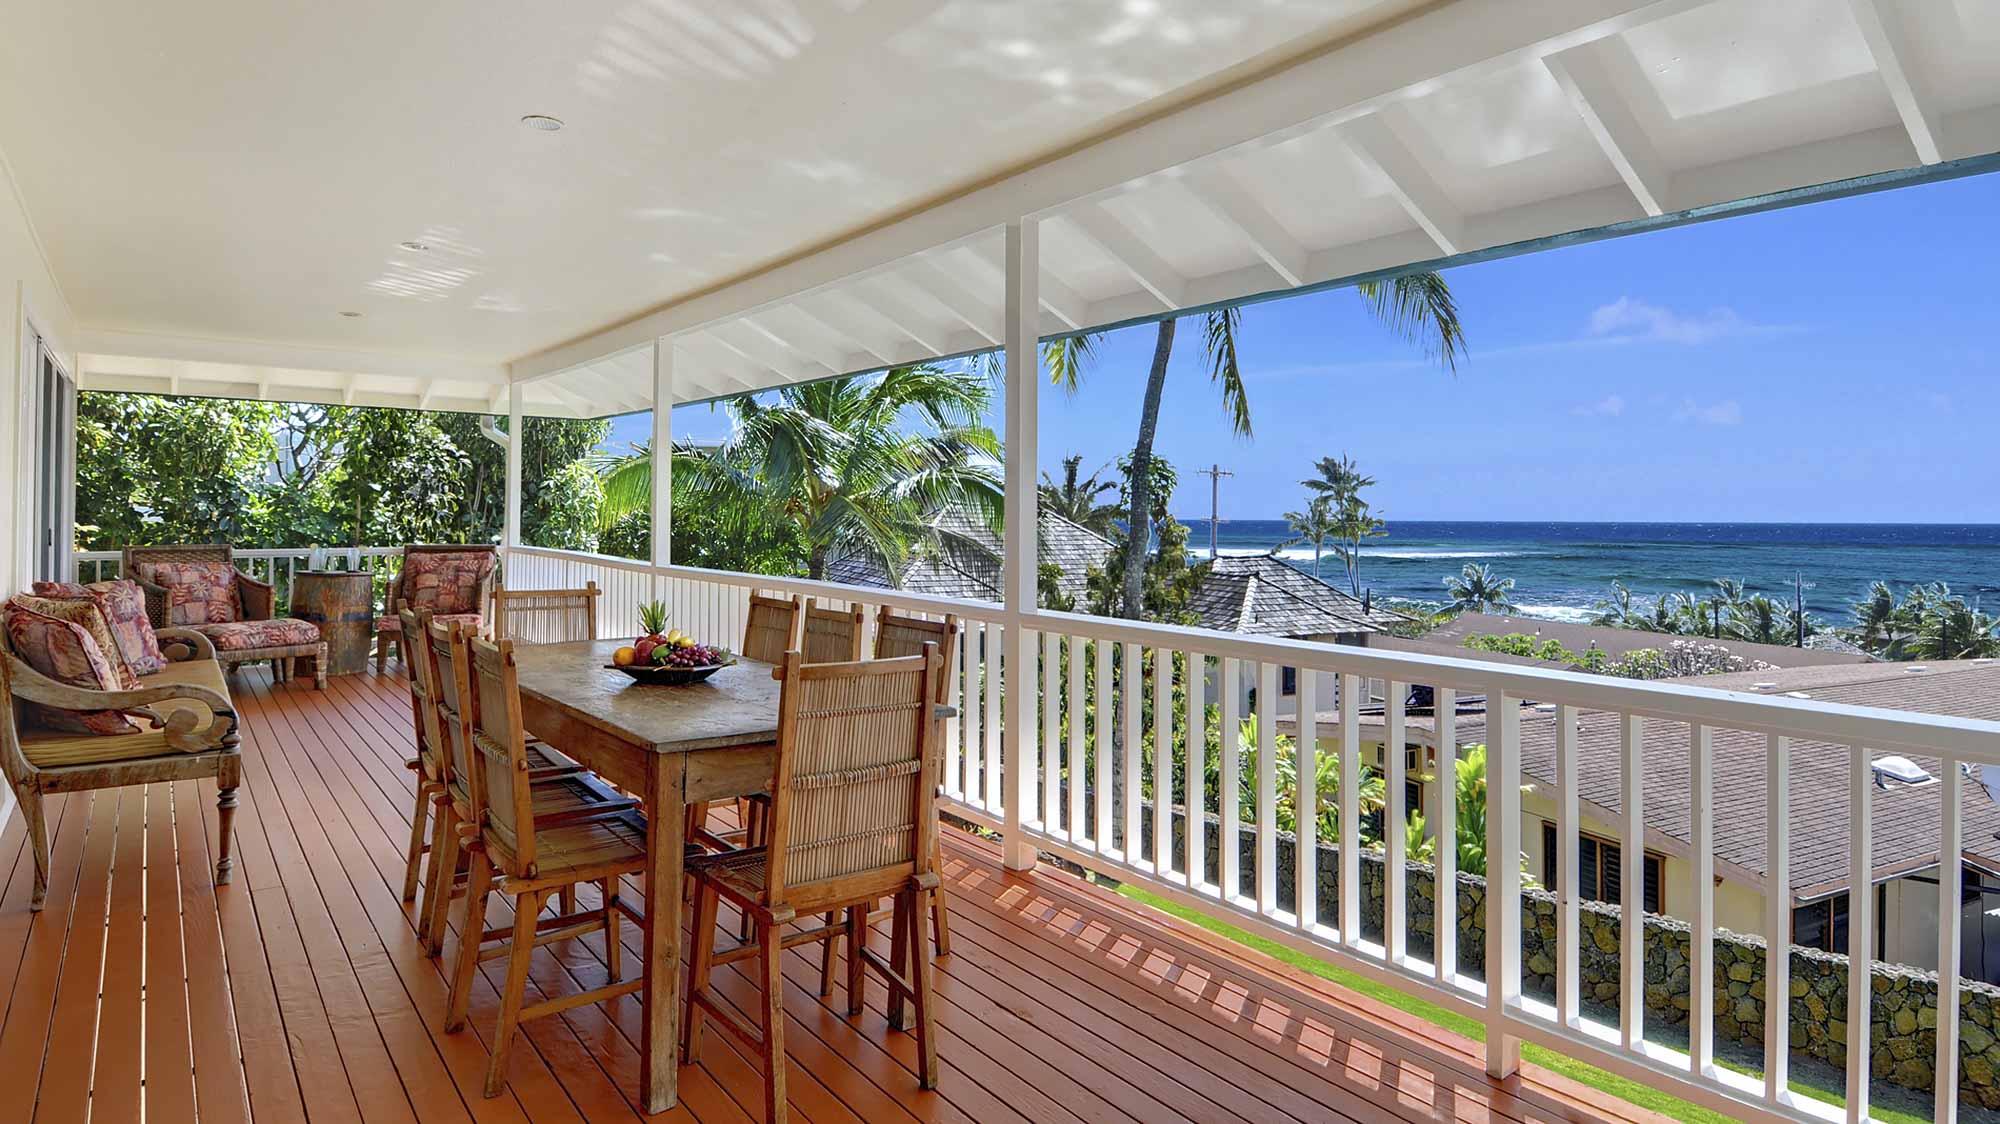 Kauai Deals at Aina Kai | Save $100 Nightly on Poipu Rental with ...